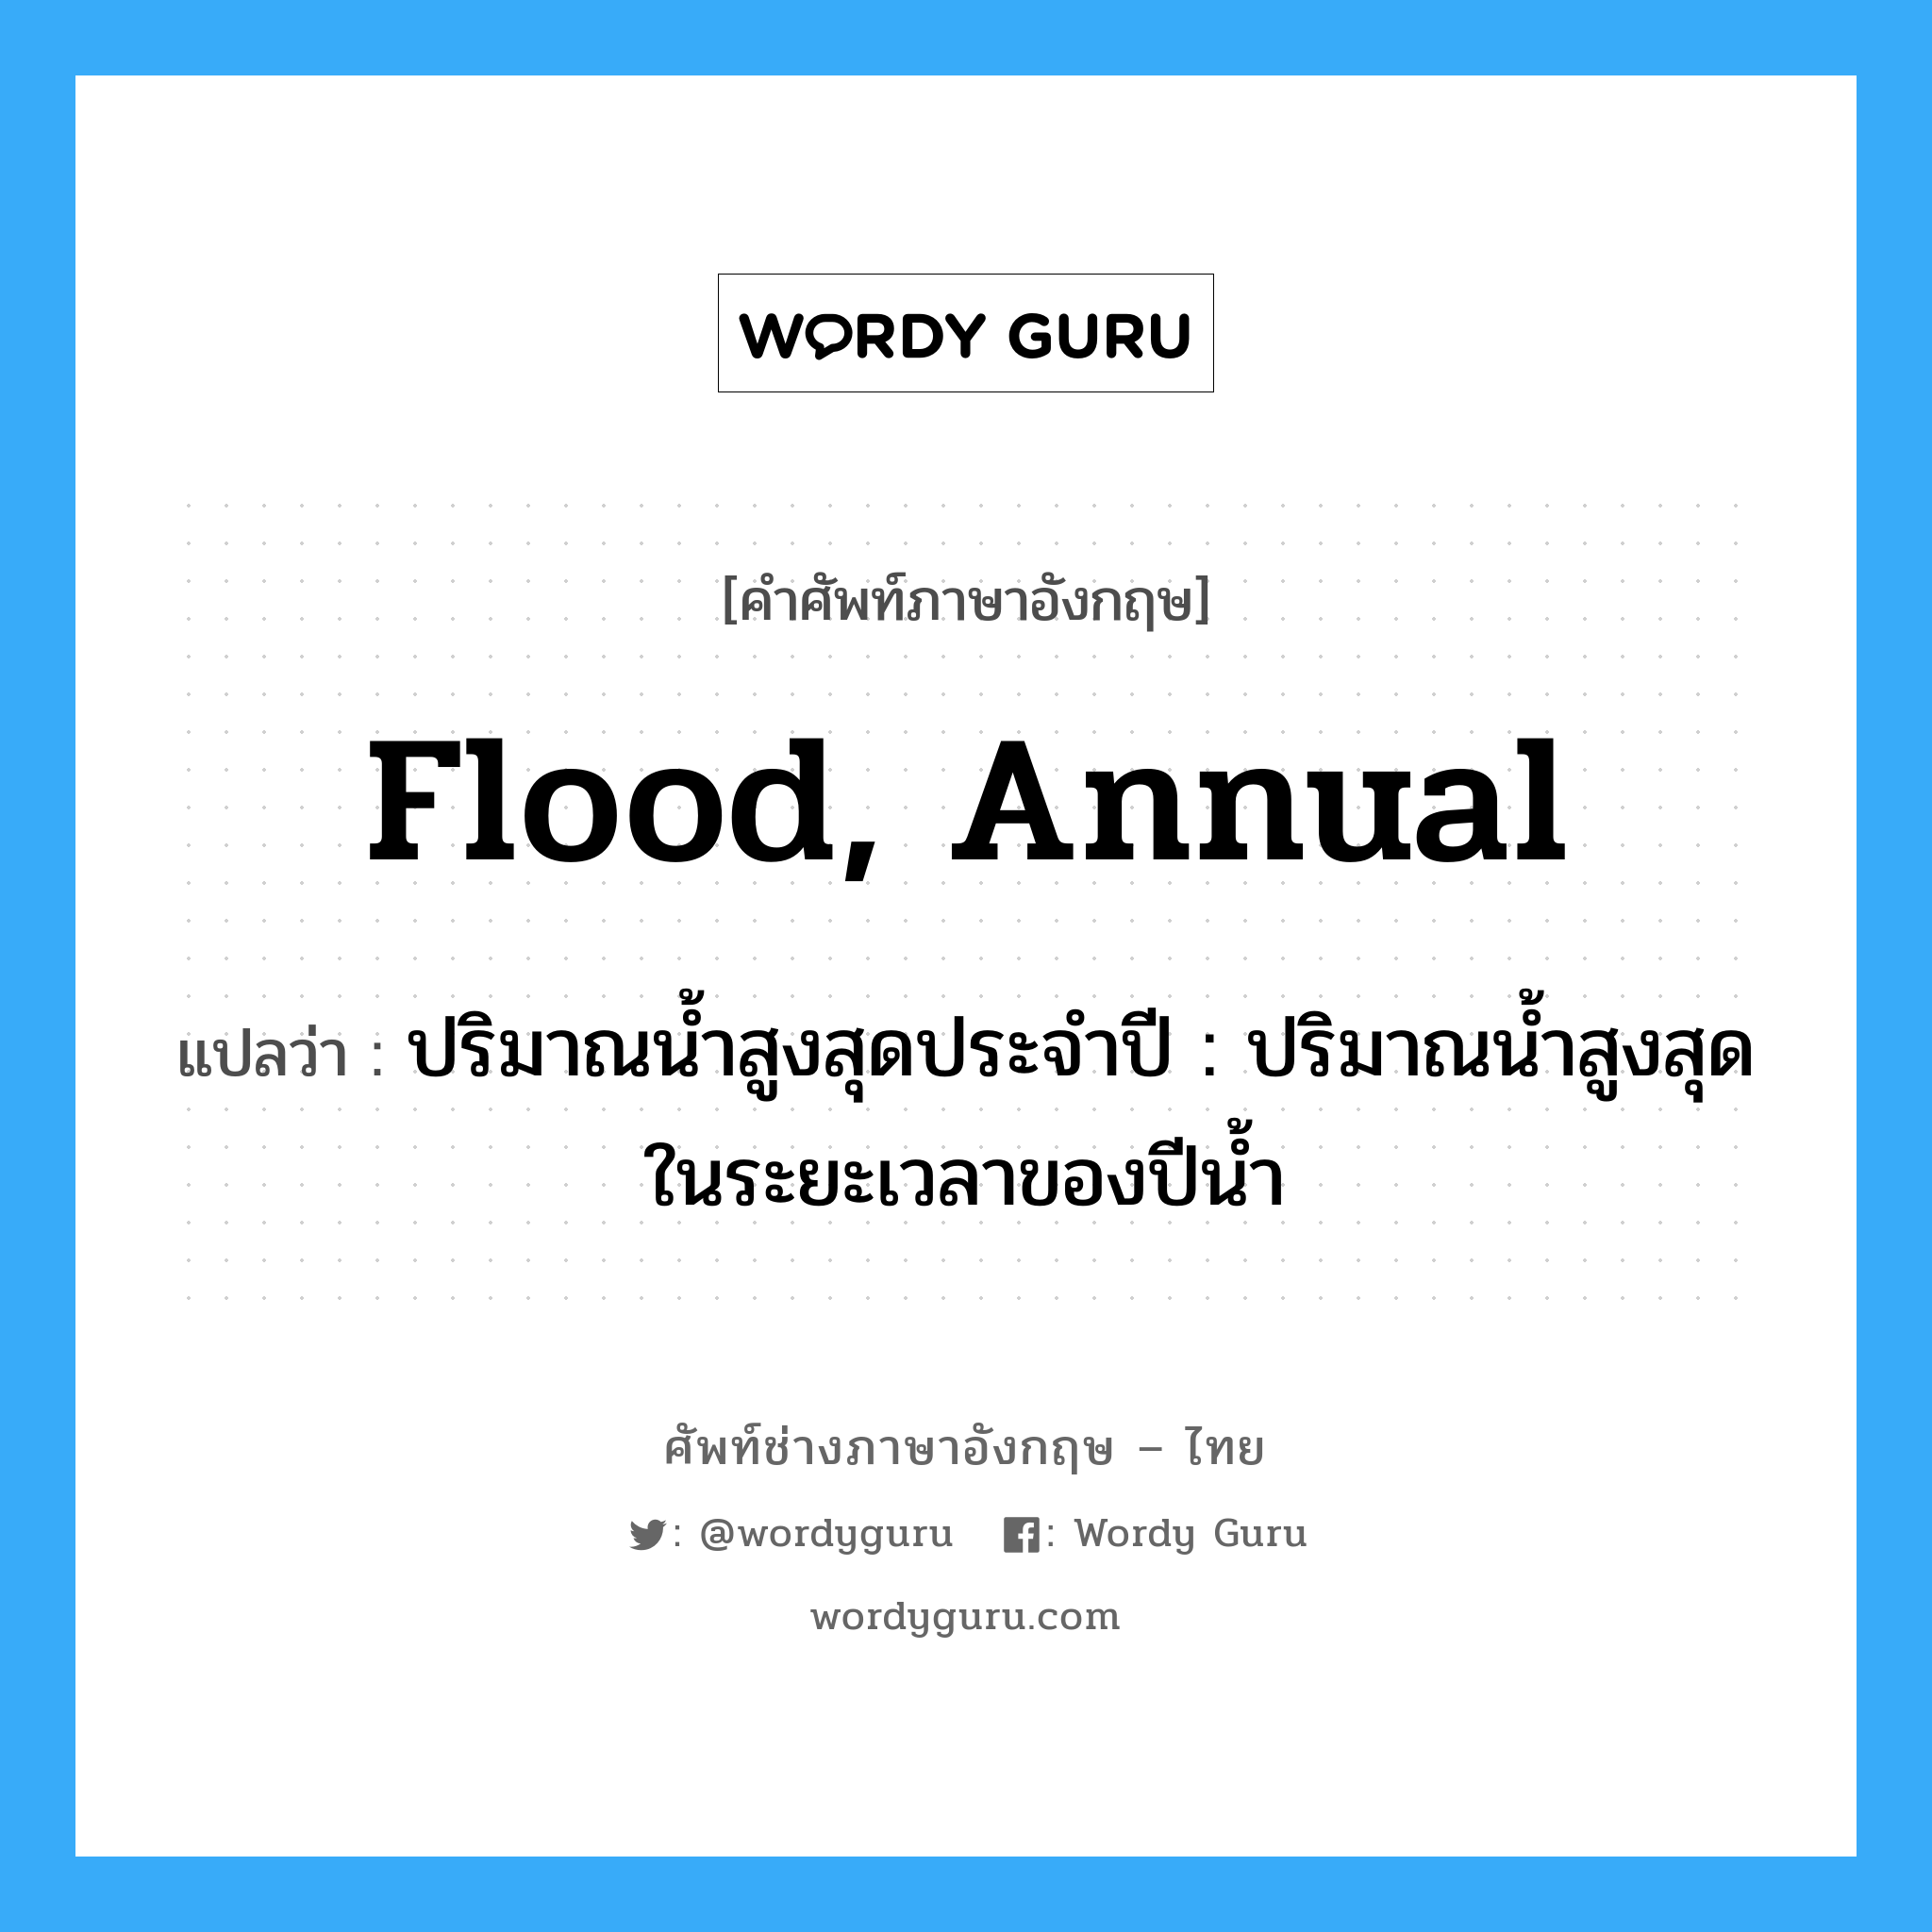 flood, annual แปลว่า?, คำศัพท์ช่างภาษาอังกฤษ - ไทย flood, annual คำศัพท์ภาษาอังกฤษ flood, annual แปลว่า ปริมาณน้ำสูงสุดประจำปี : ปริมาณน้ำสูงสุดในระยะเวลาของปีน้ำ